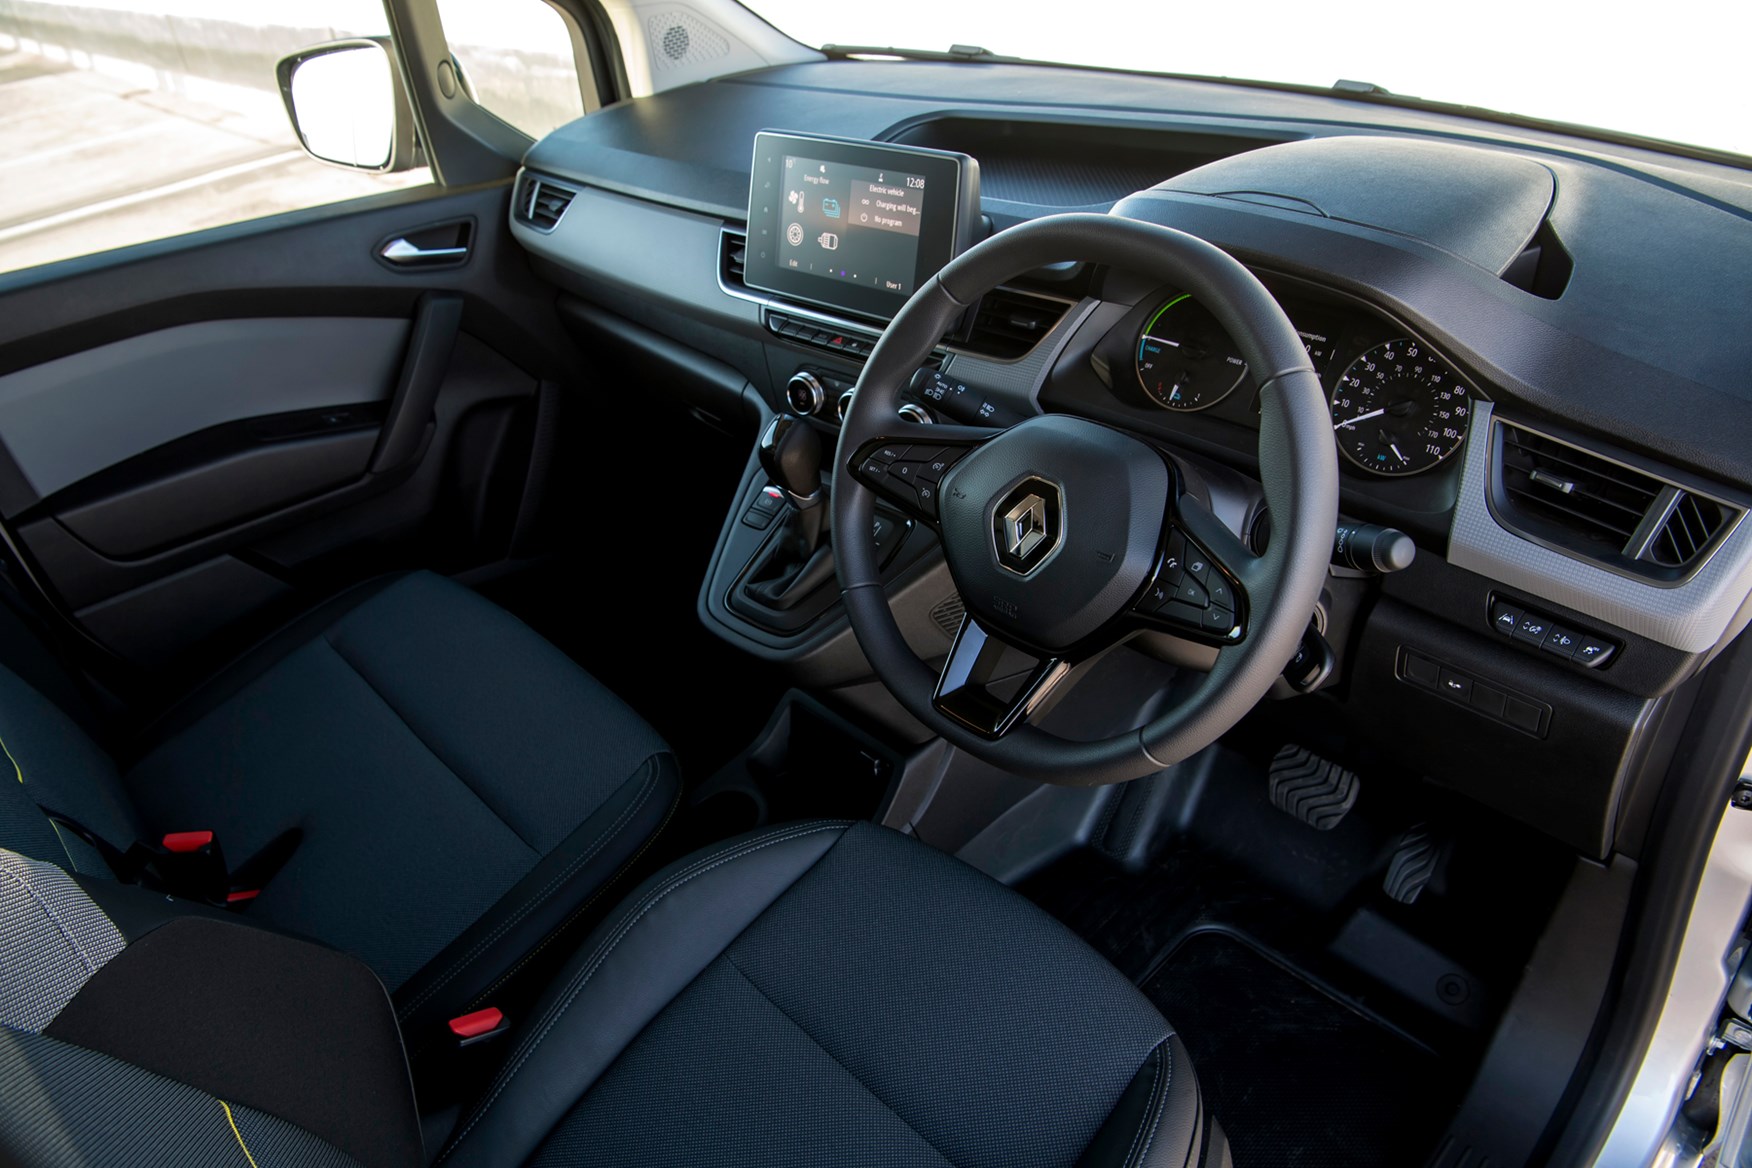 Renault Kangoo E-Tech cabin RHD